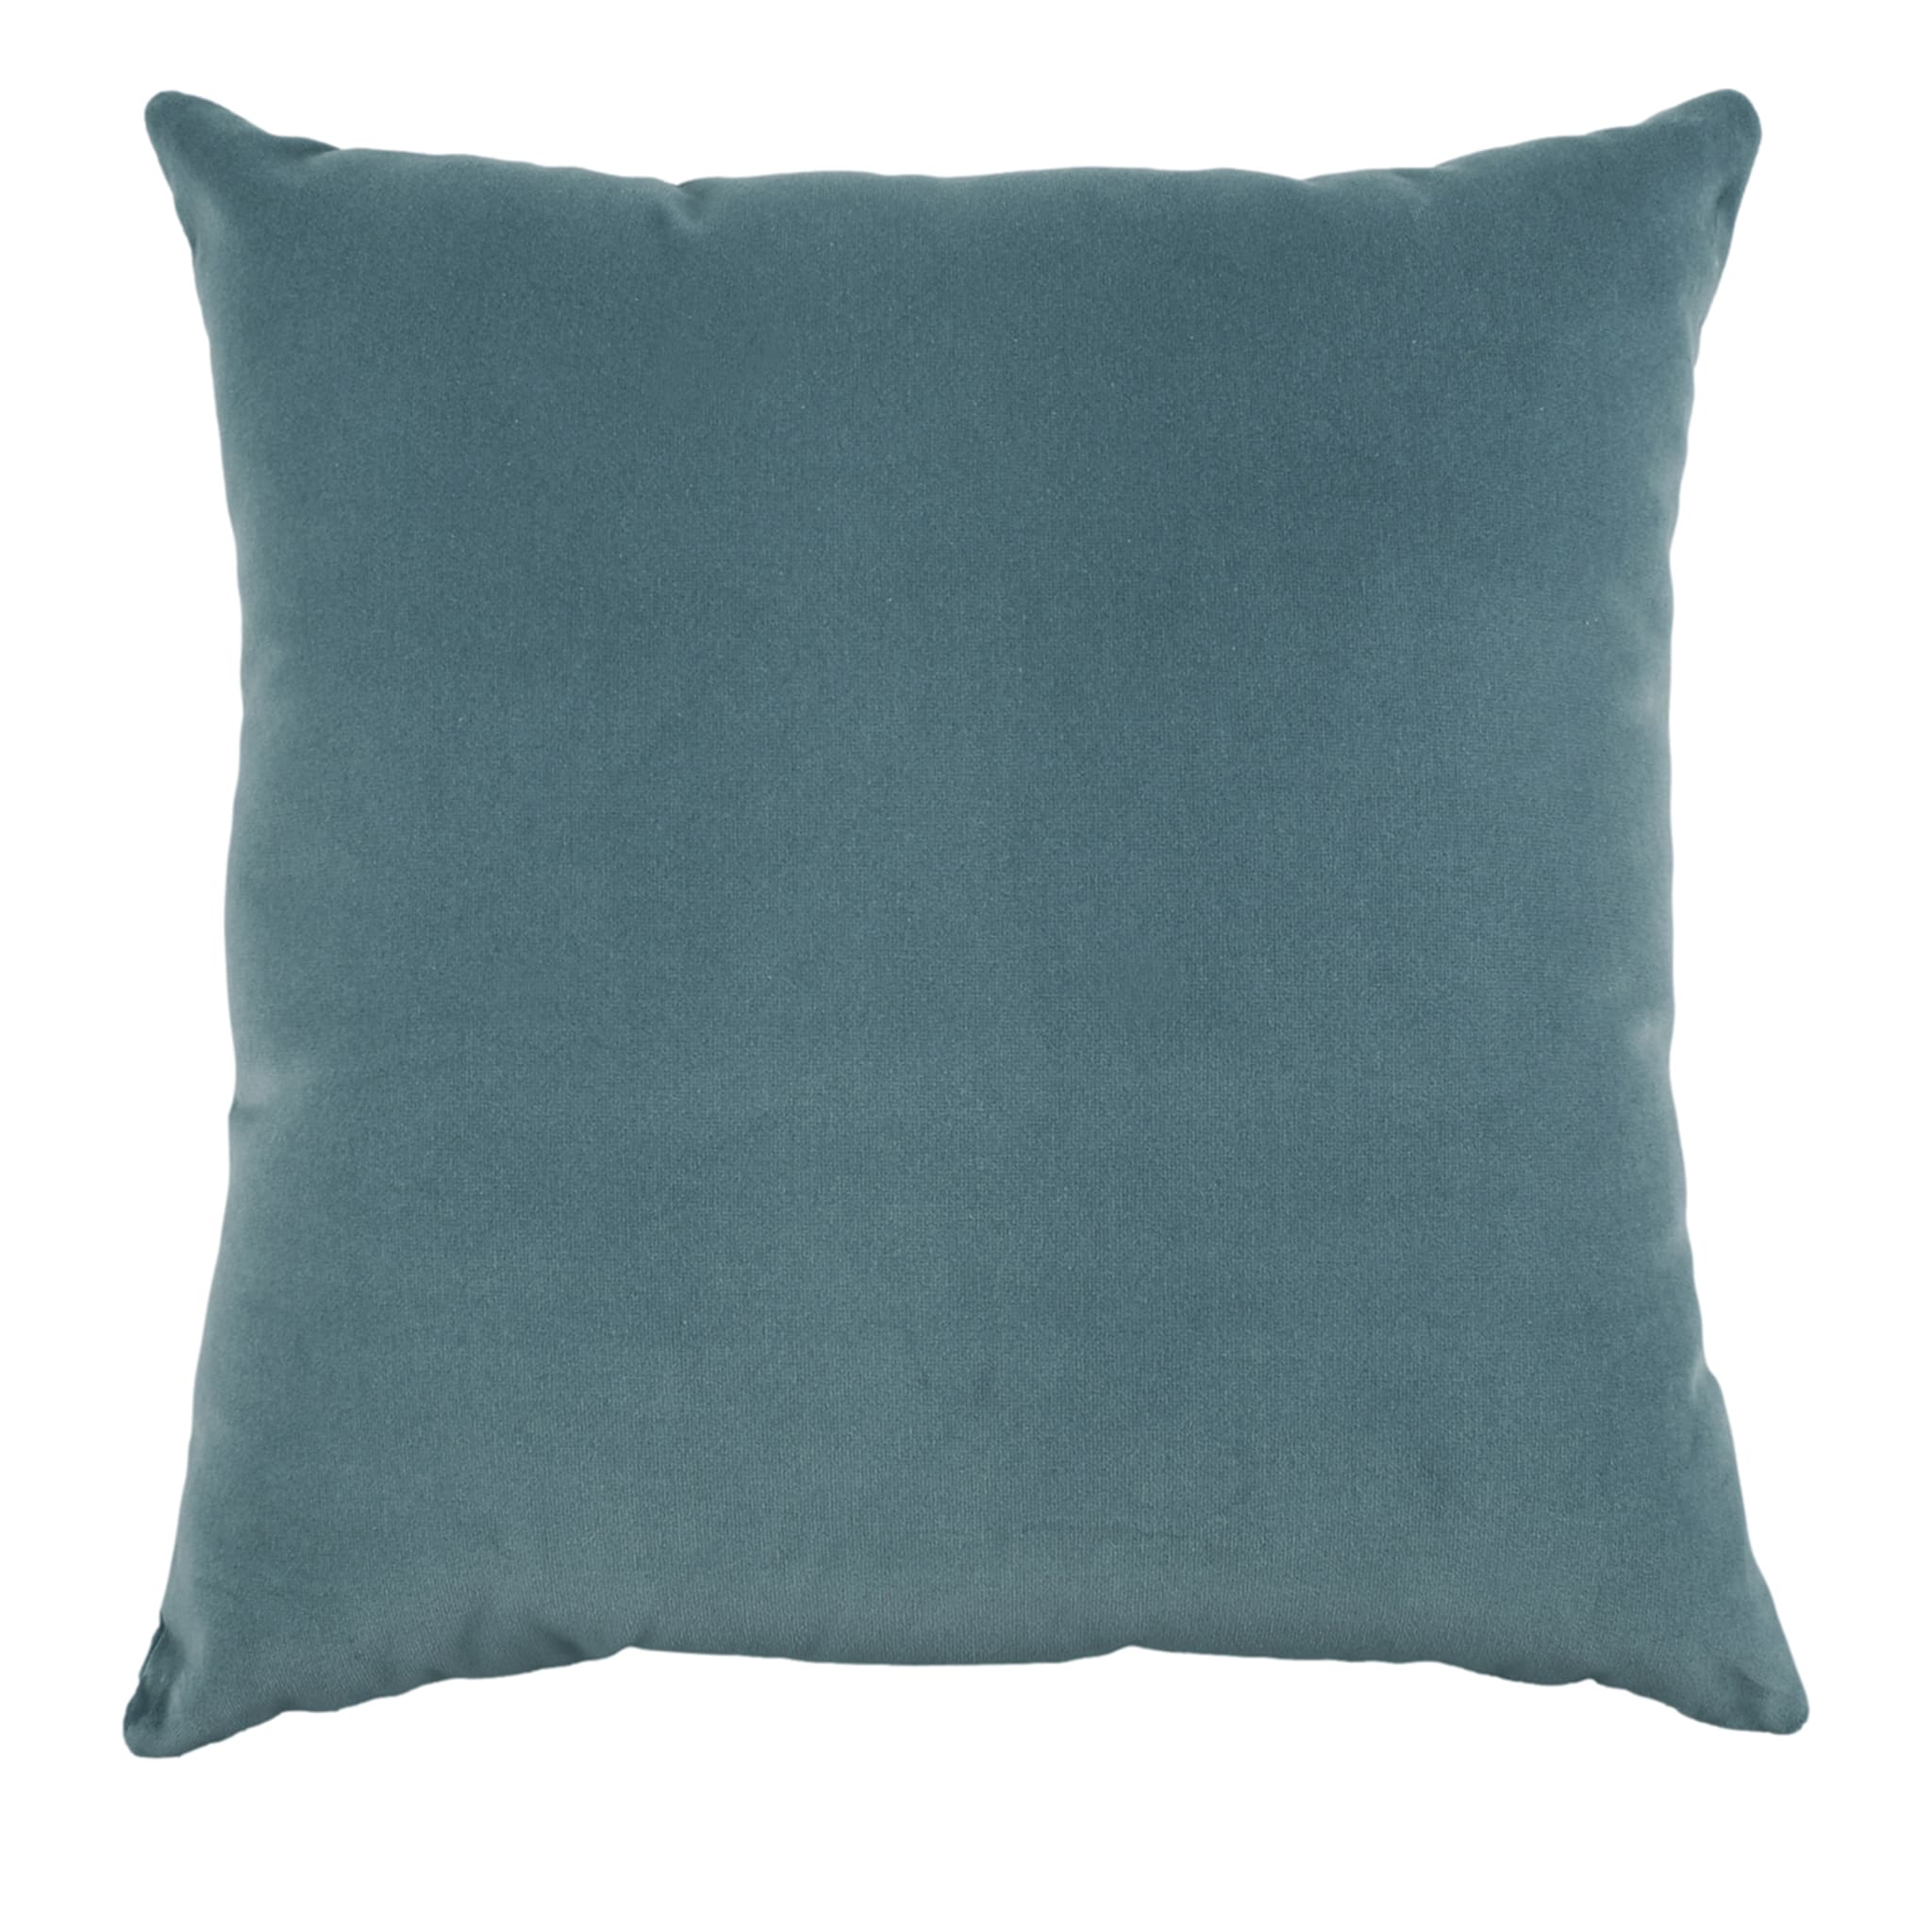 Light Blue Carrè Cushion in Cotton Velvet - Main view